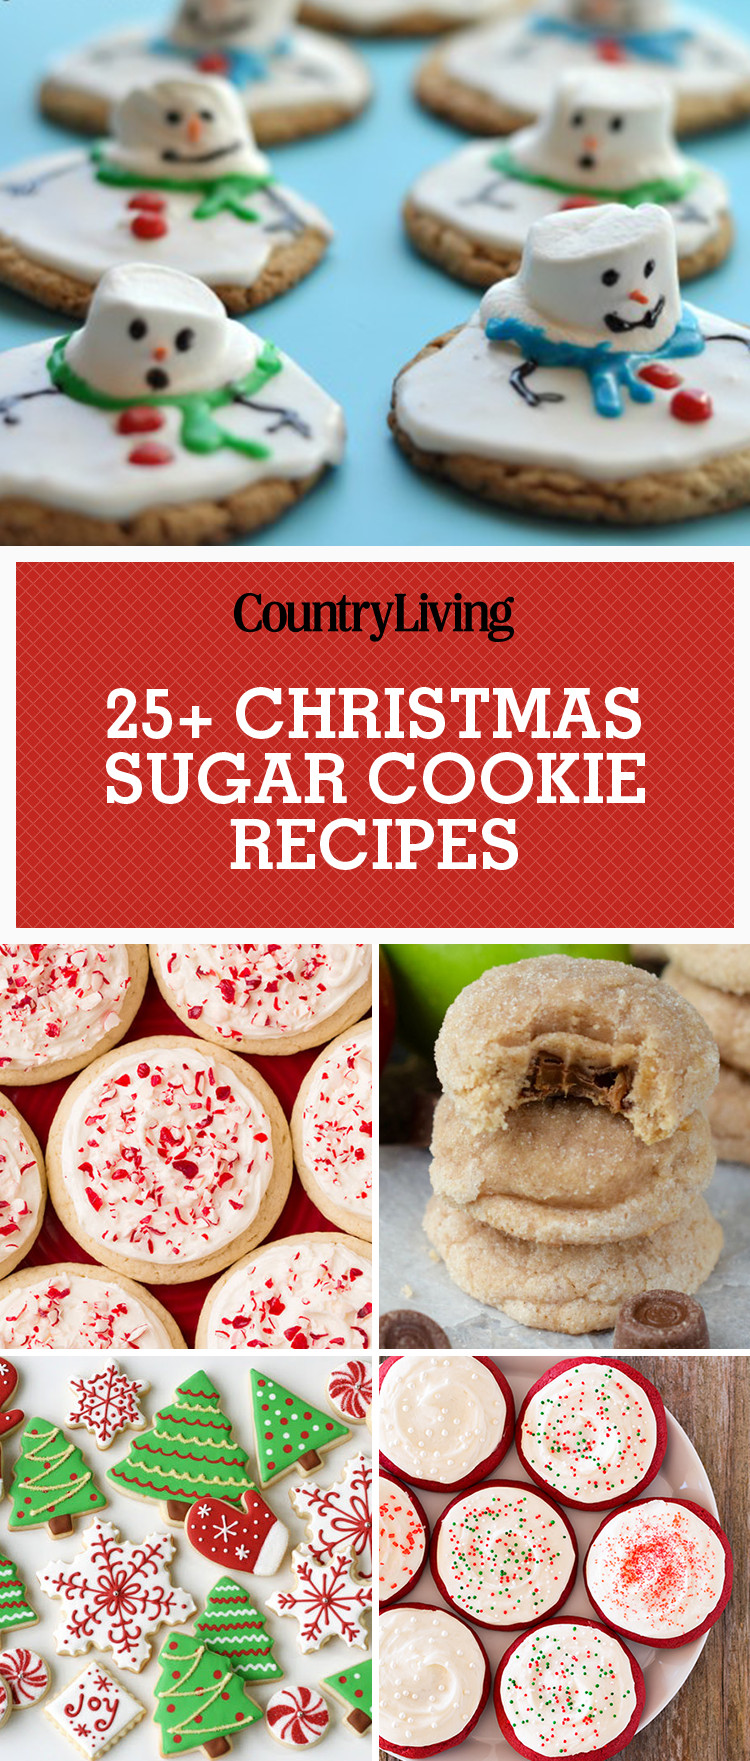 Christmas Cookies Sugar
 25 Easy Christmas Sugar Cookies Recipes & Decorating